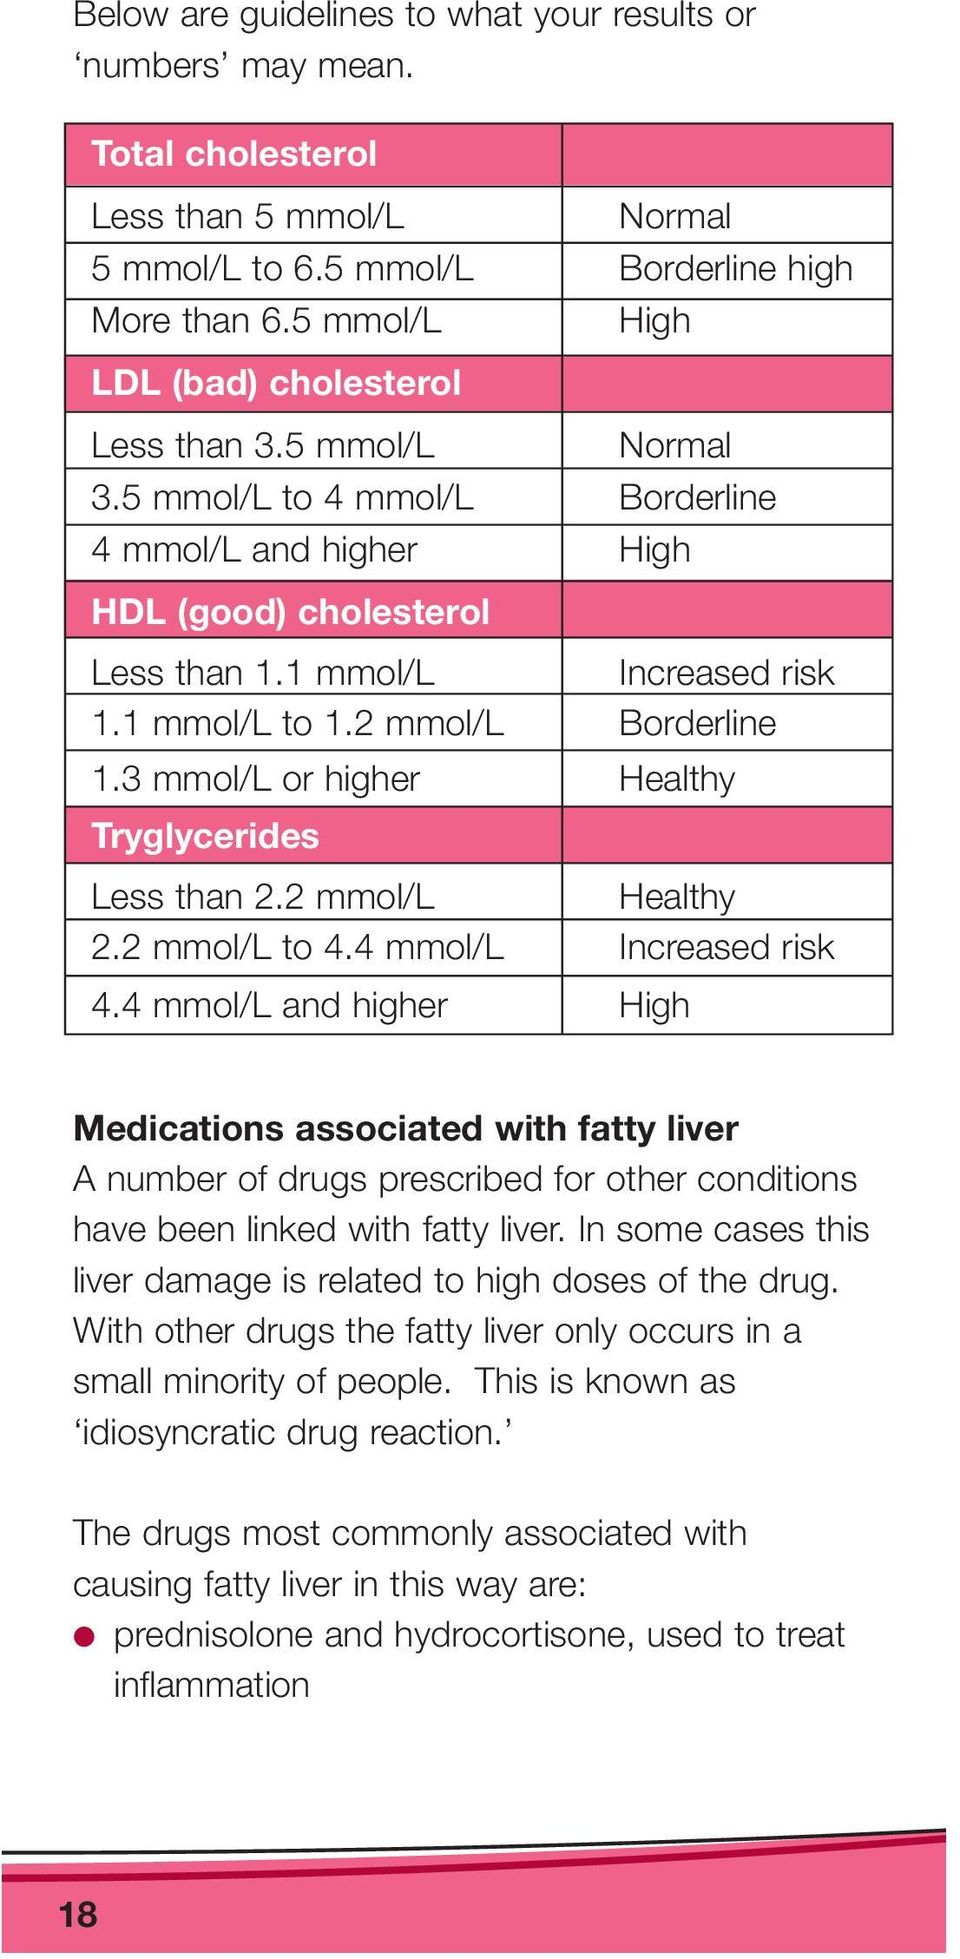 2 mmol/l Borderline 1.3 mmol/l or higher Healthy Tryglycerides Less than 2.2 mmol/l Healthy 2.2 mmol/l to 4.4 mmol/l Increased risk 4.